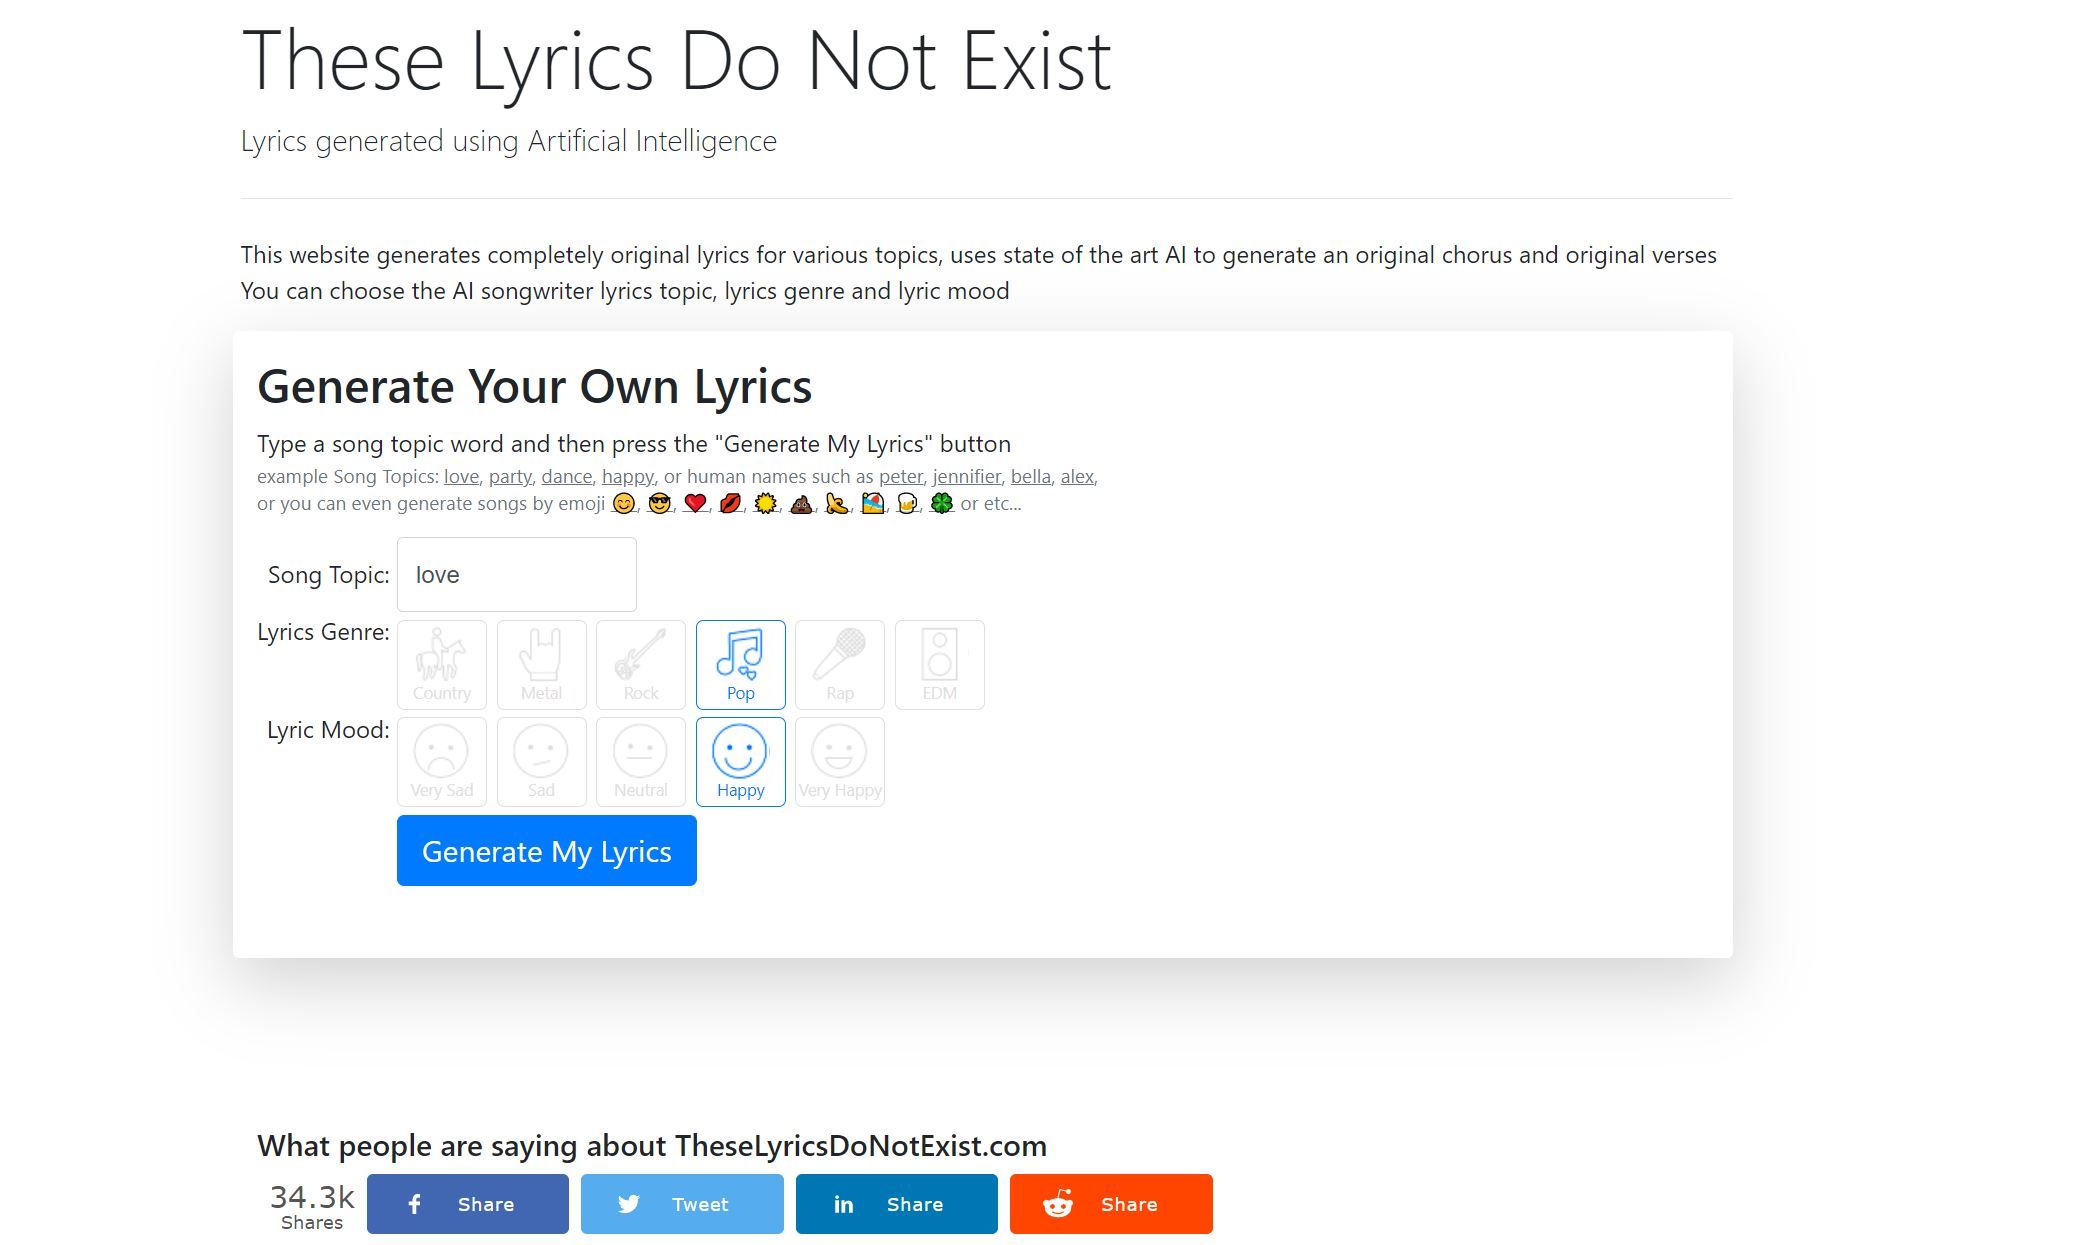  Generate original lyrics with an AI songwriting